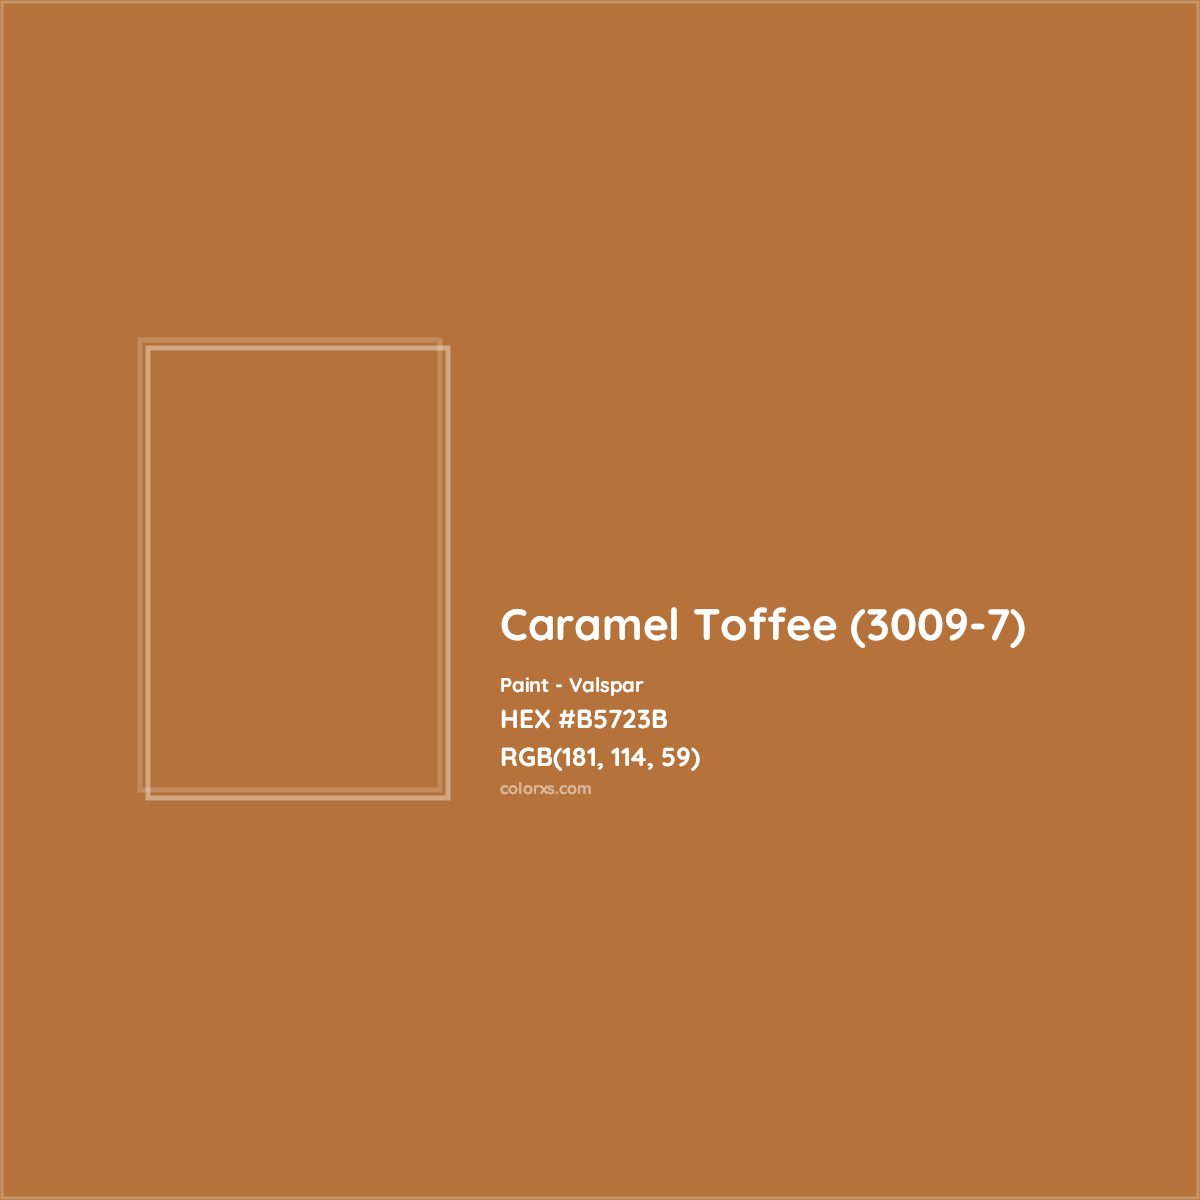 HEX #B5723B Caramel Toffee (3009-7) Paint Valspar - Color Code